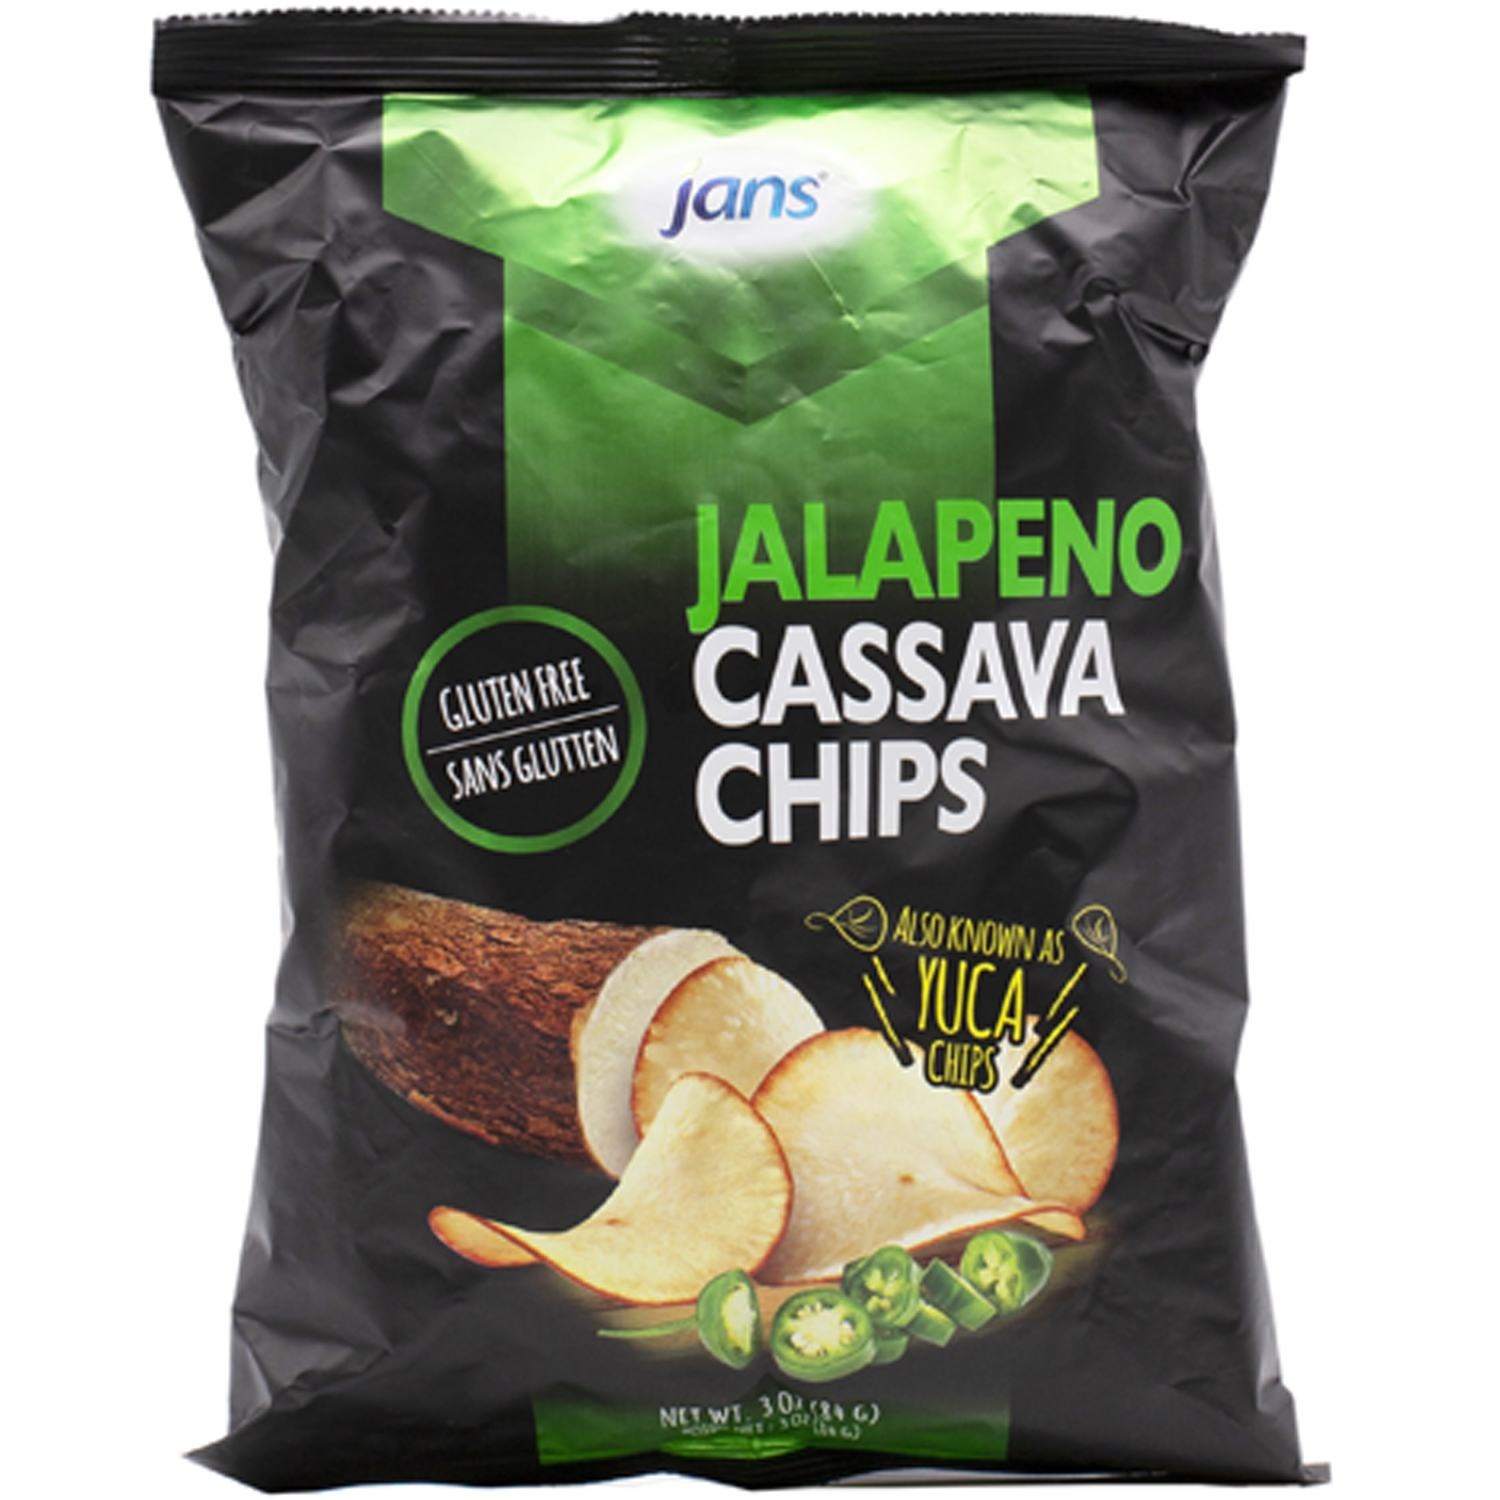 slide 1 of 1, Jans Jalapeno Cassava Chips, 1 ct